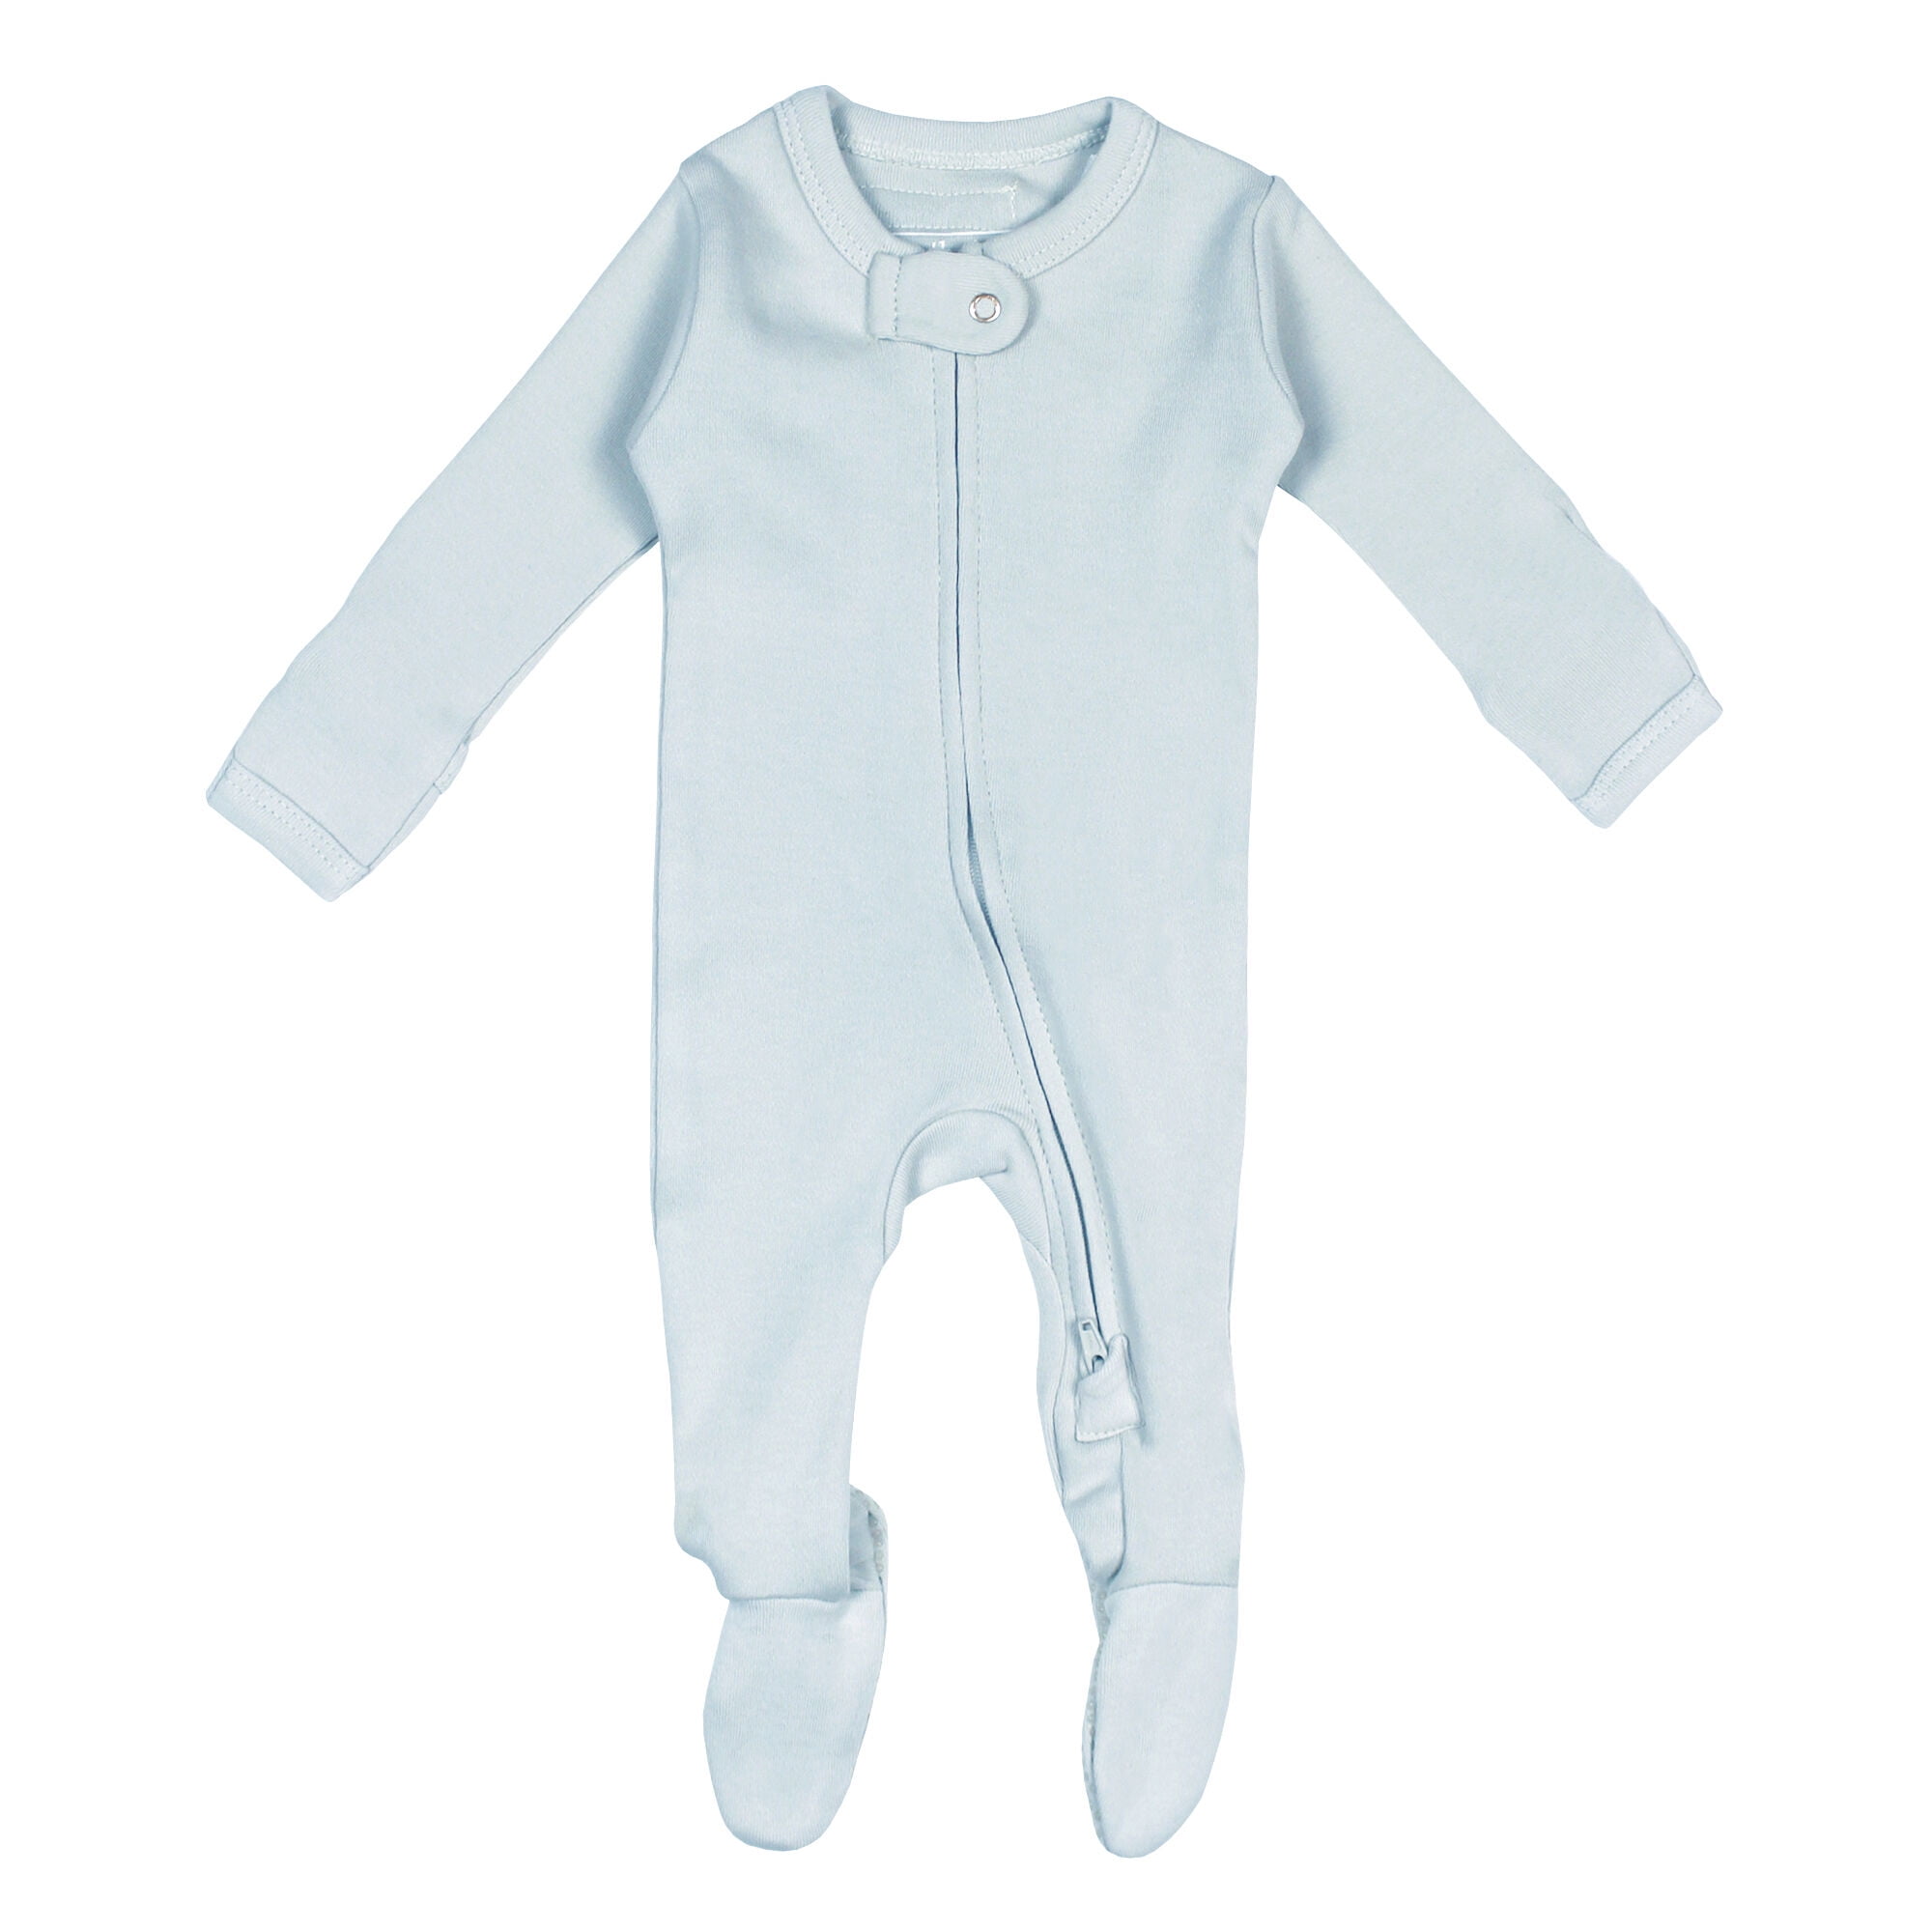 L'ovedbaby Baby Unisex 100% Organic Cotton Zipper Footie, Sleep